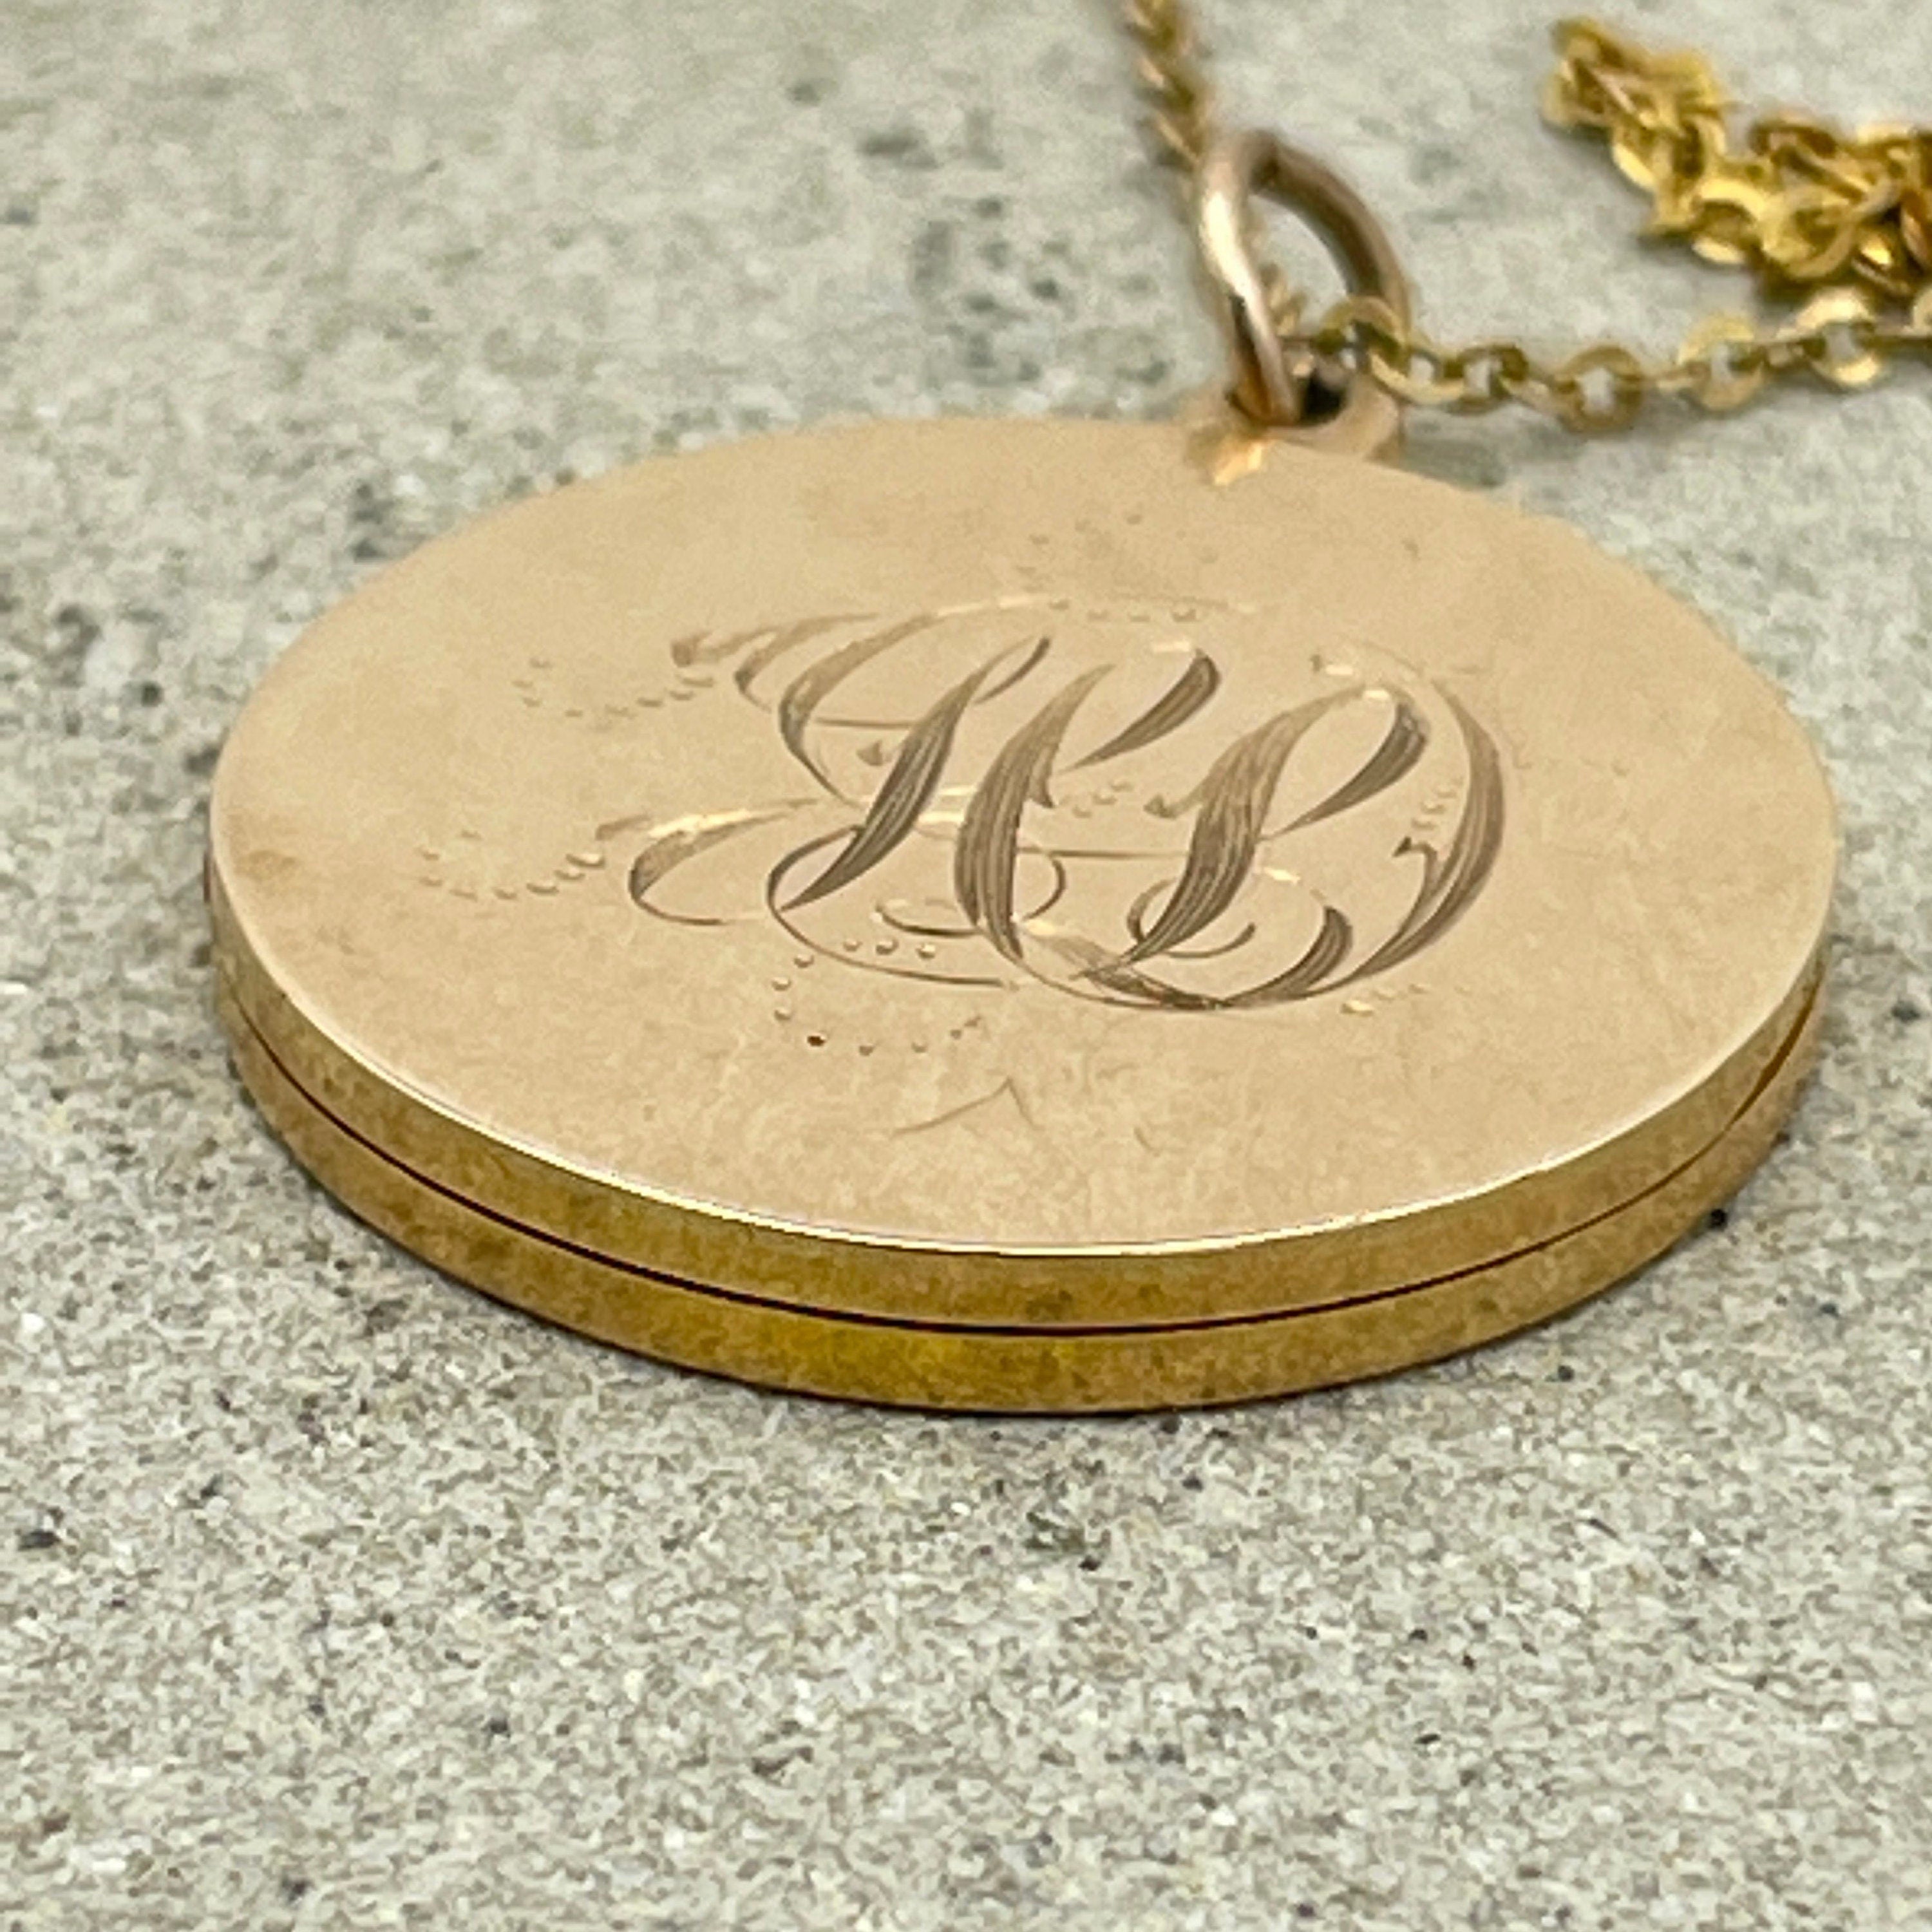 Edwardian hallmarked 15ct gold round locket, chester hallmark 1911, 8 grams, on 9ct gold chain with barrel clasp